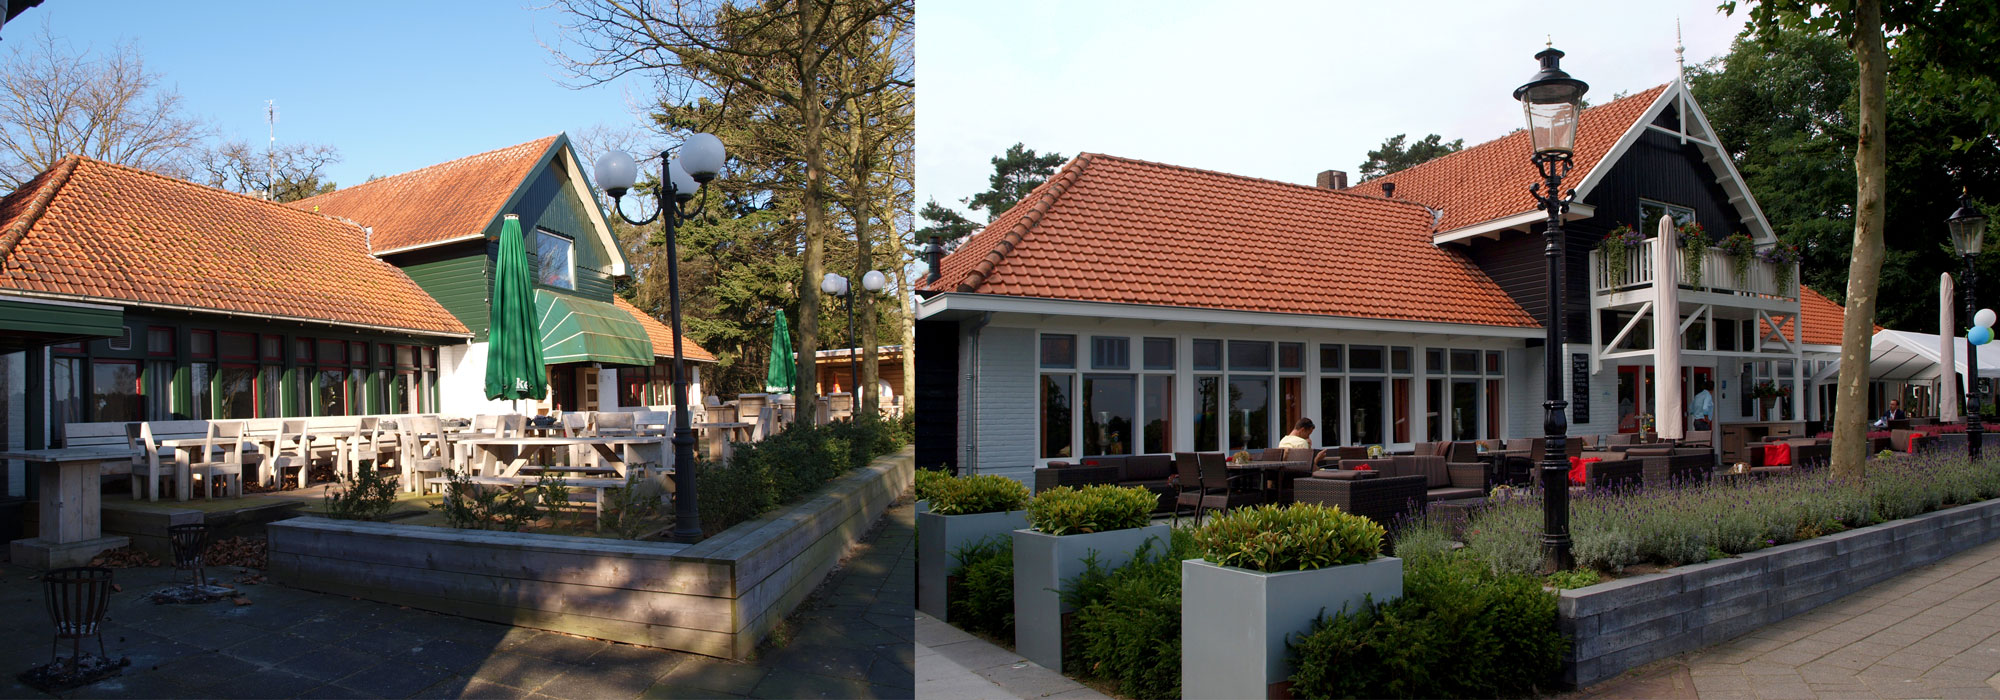 Restaurant en terras vóór en na de verbouwing